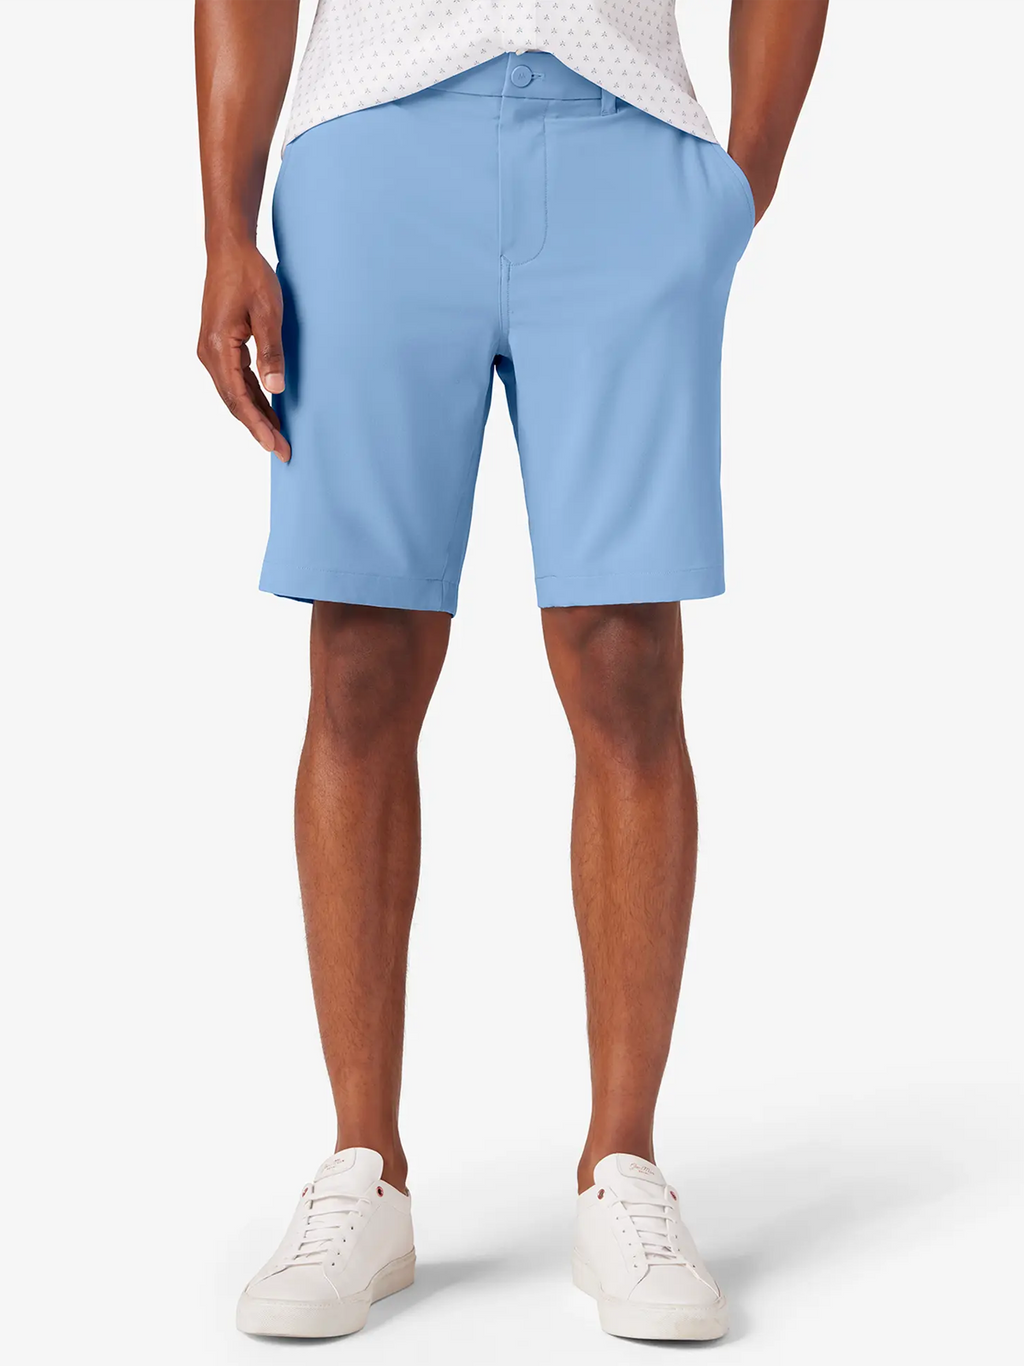 Helmsman Shorts in Carolina Blue